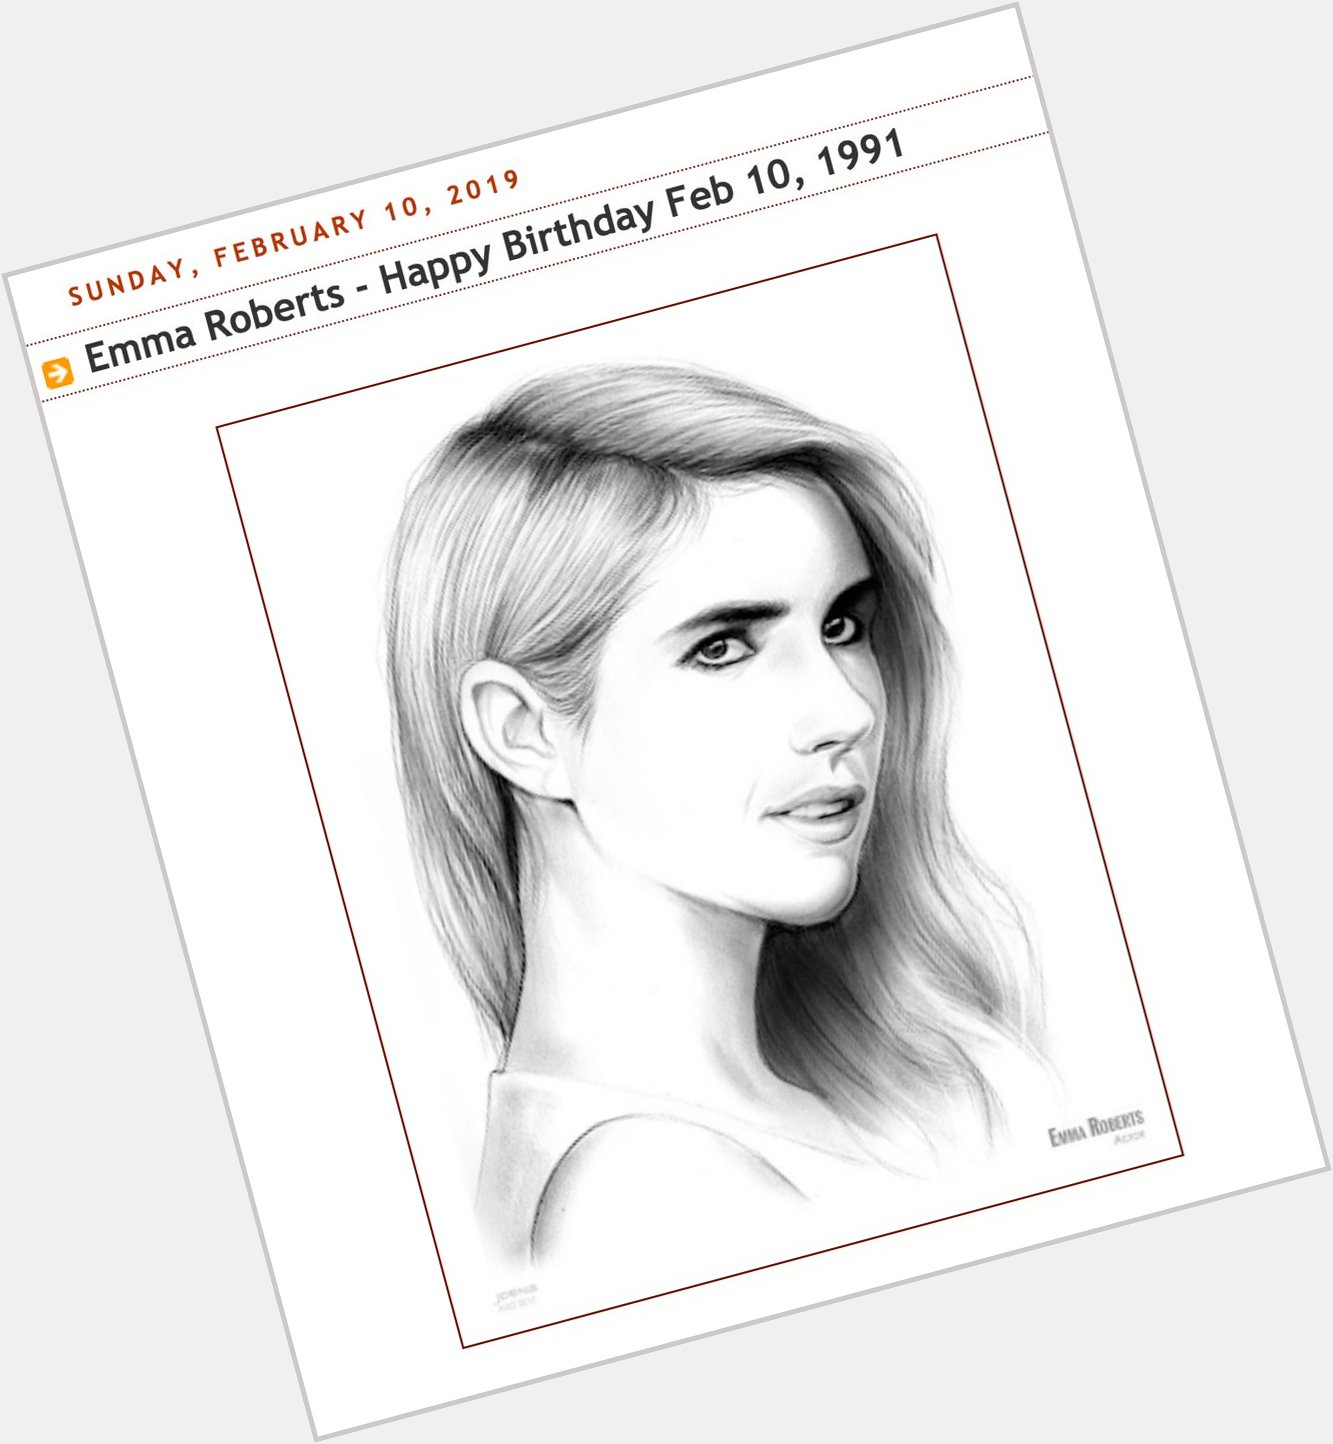 Happy Birthday, Emma Roberts... Born Feb 10, 1991. 